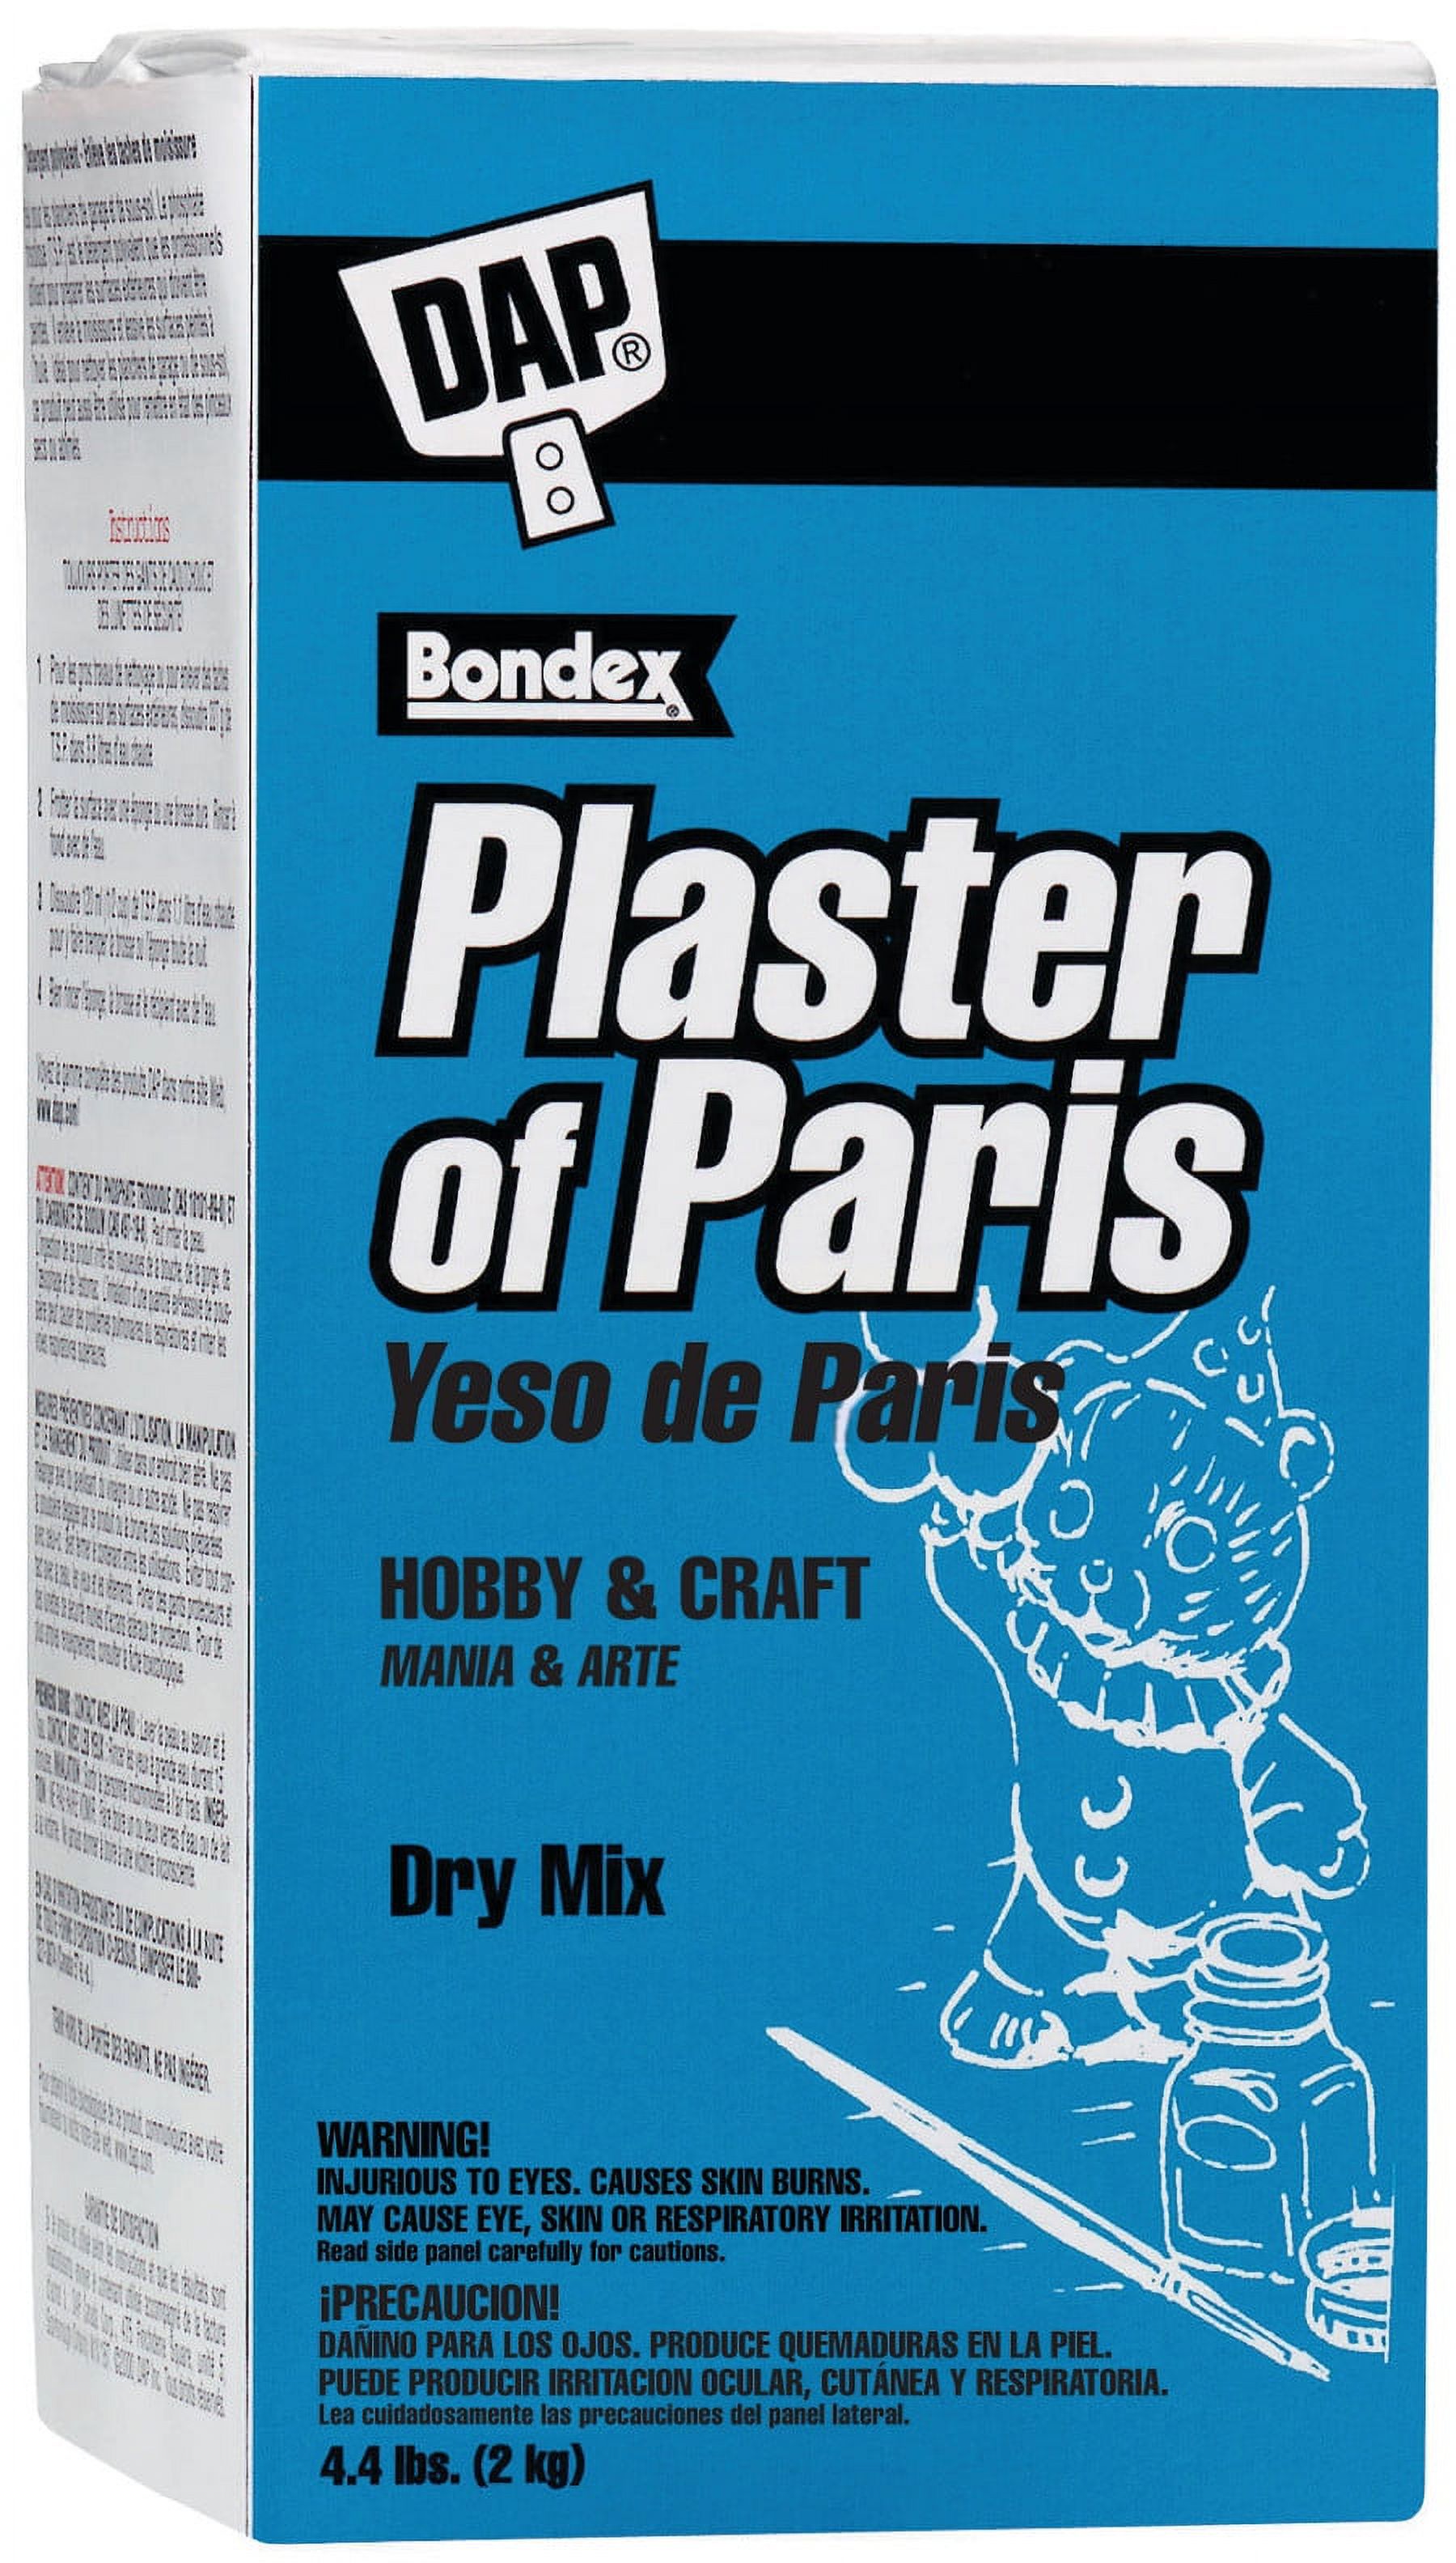 DAP Plaster of Paris Dry Mix 4.4lb Box - image 1 of 2